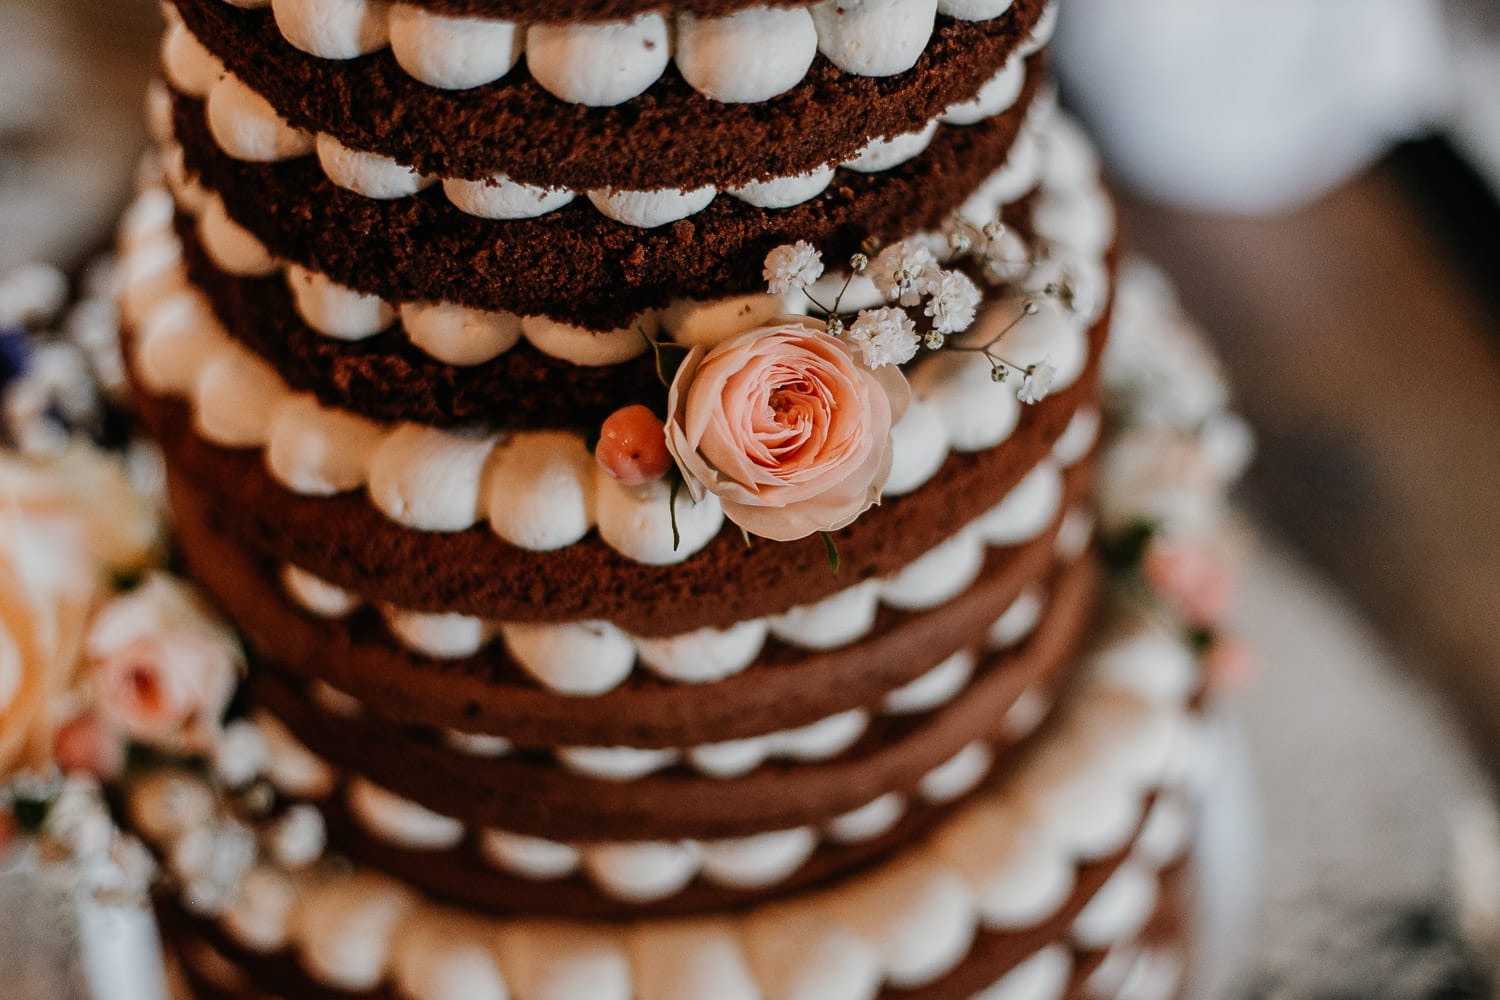 sweet table, sweettable, wedding cake, snack bar, krümelfee, cakes, kuchen, pop cakes, naked cake, sami naked cake, half naked cake